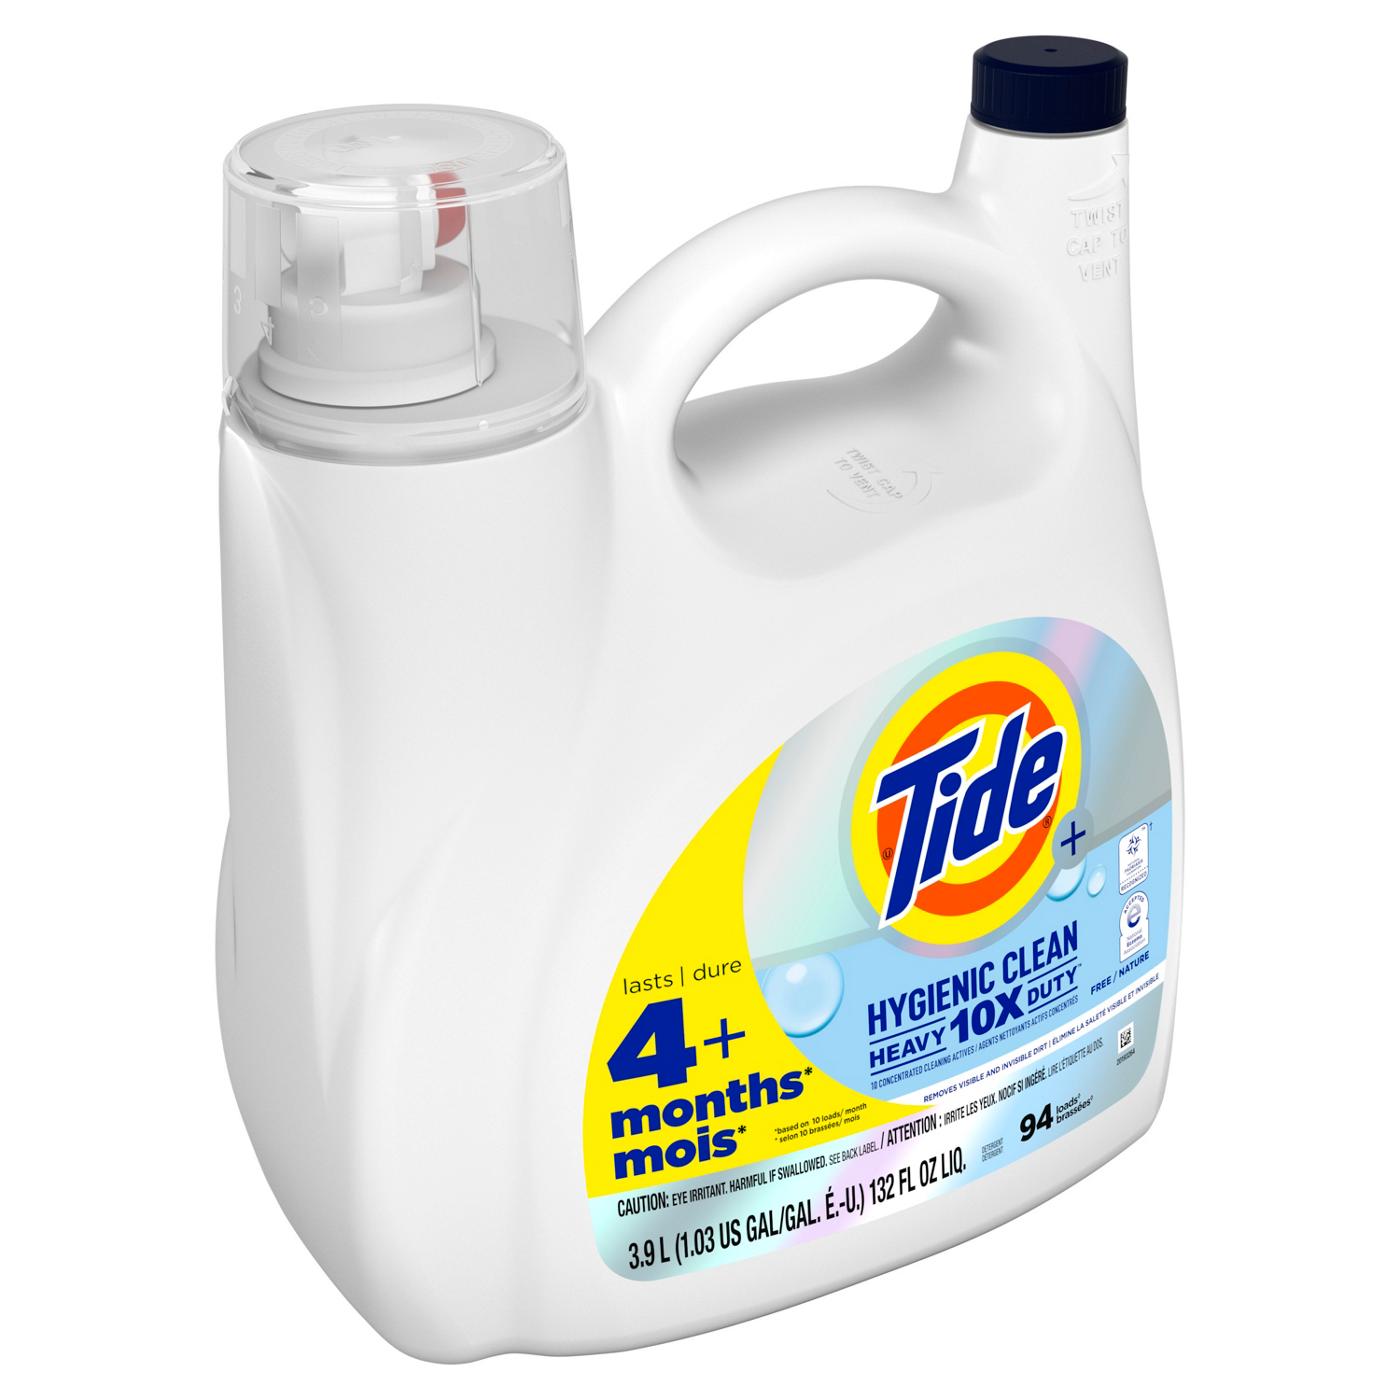 Tide + Hygienic Clean Heavy Duty HE Liquid Laundry Detergent, 94 Loads; image 5 of 6